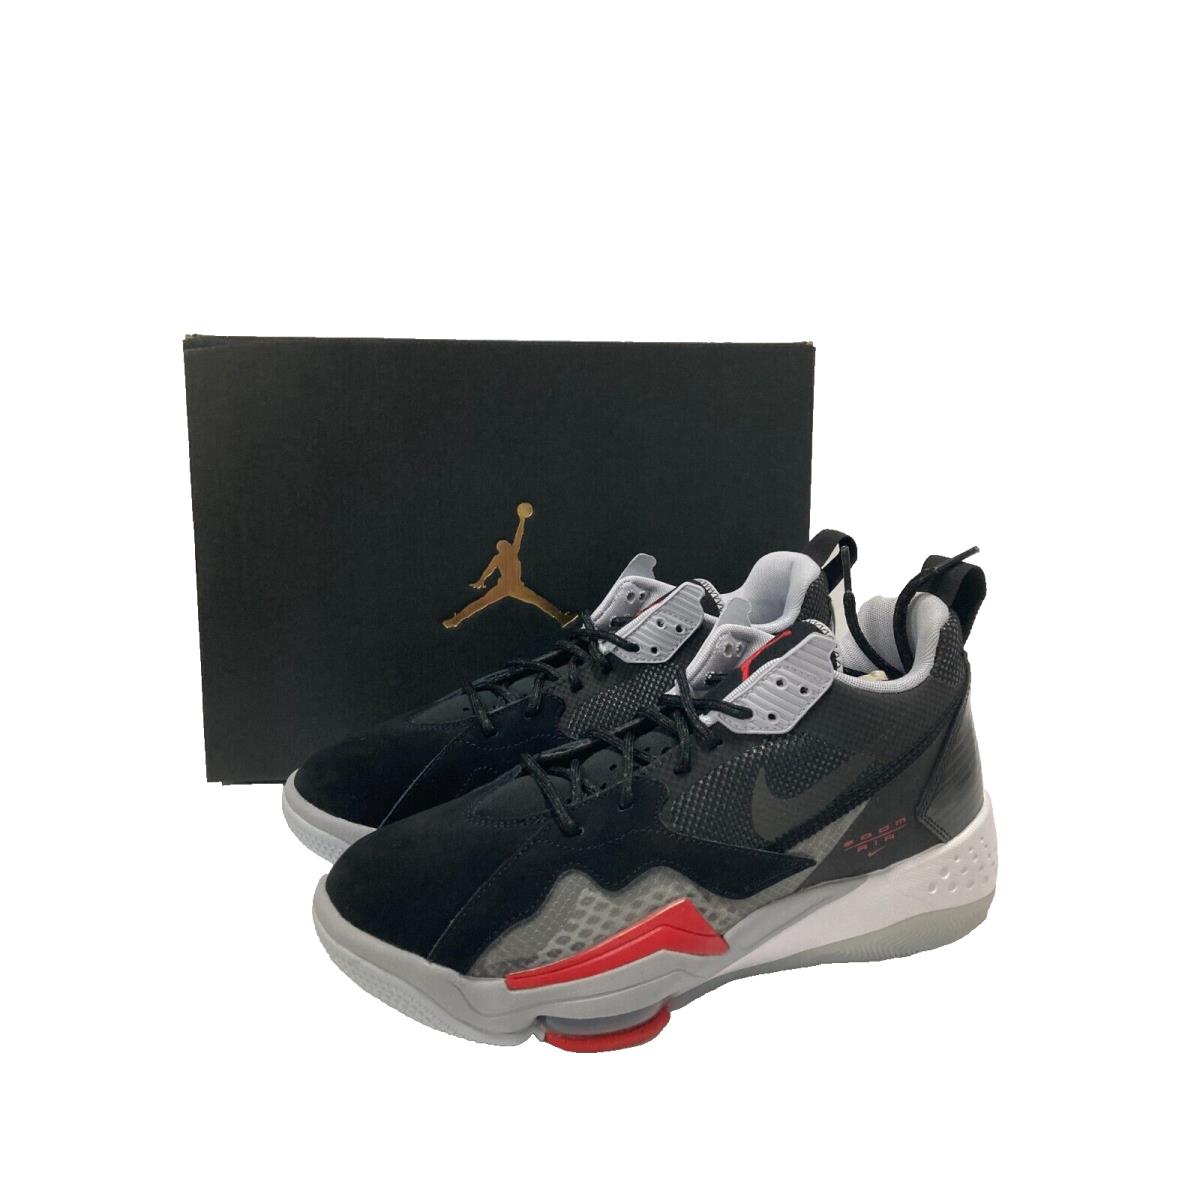 Nike Jordan Zoom 92 Shoes Men`s Sneakers CK9183-001 Black/university Red/white